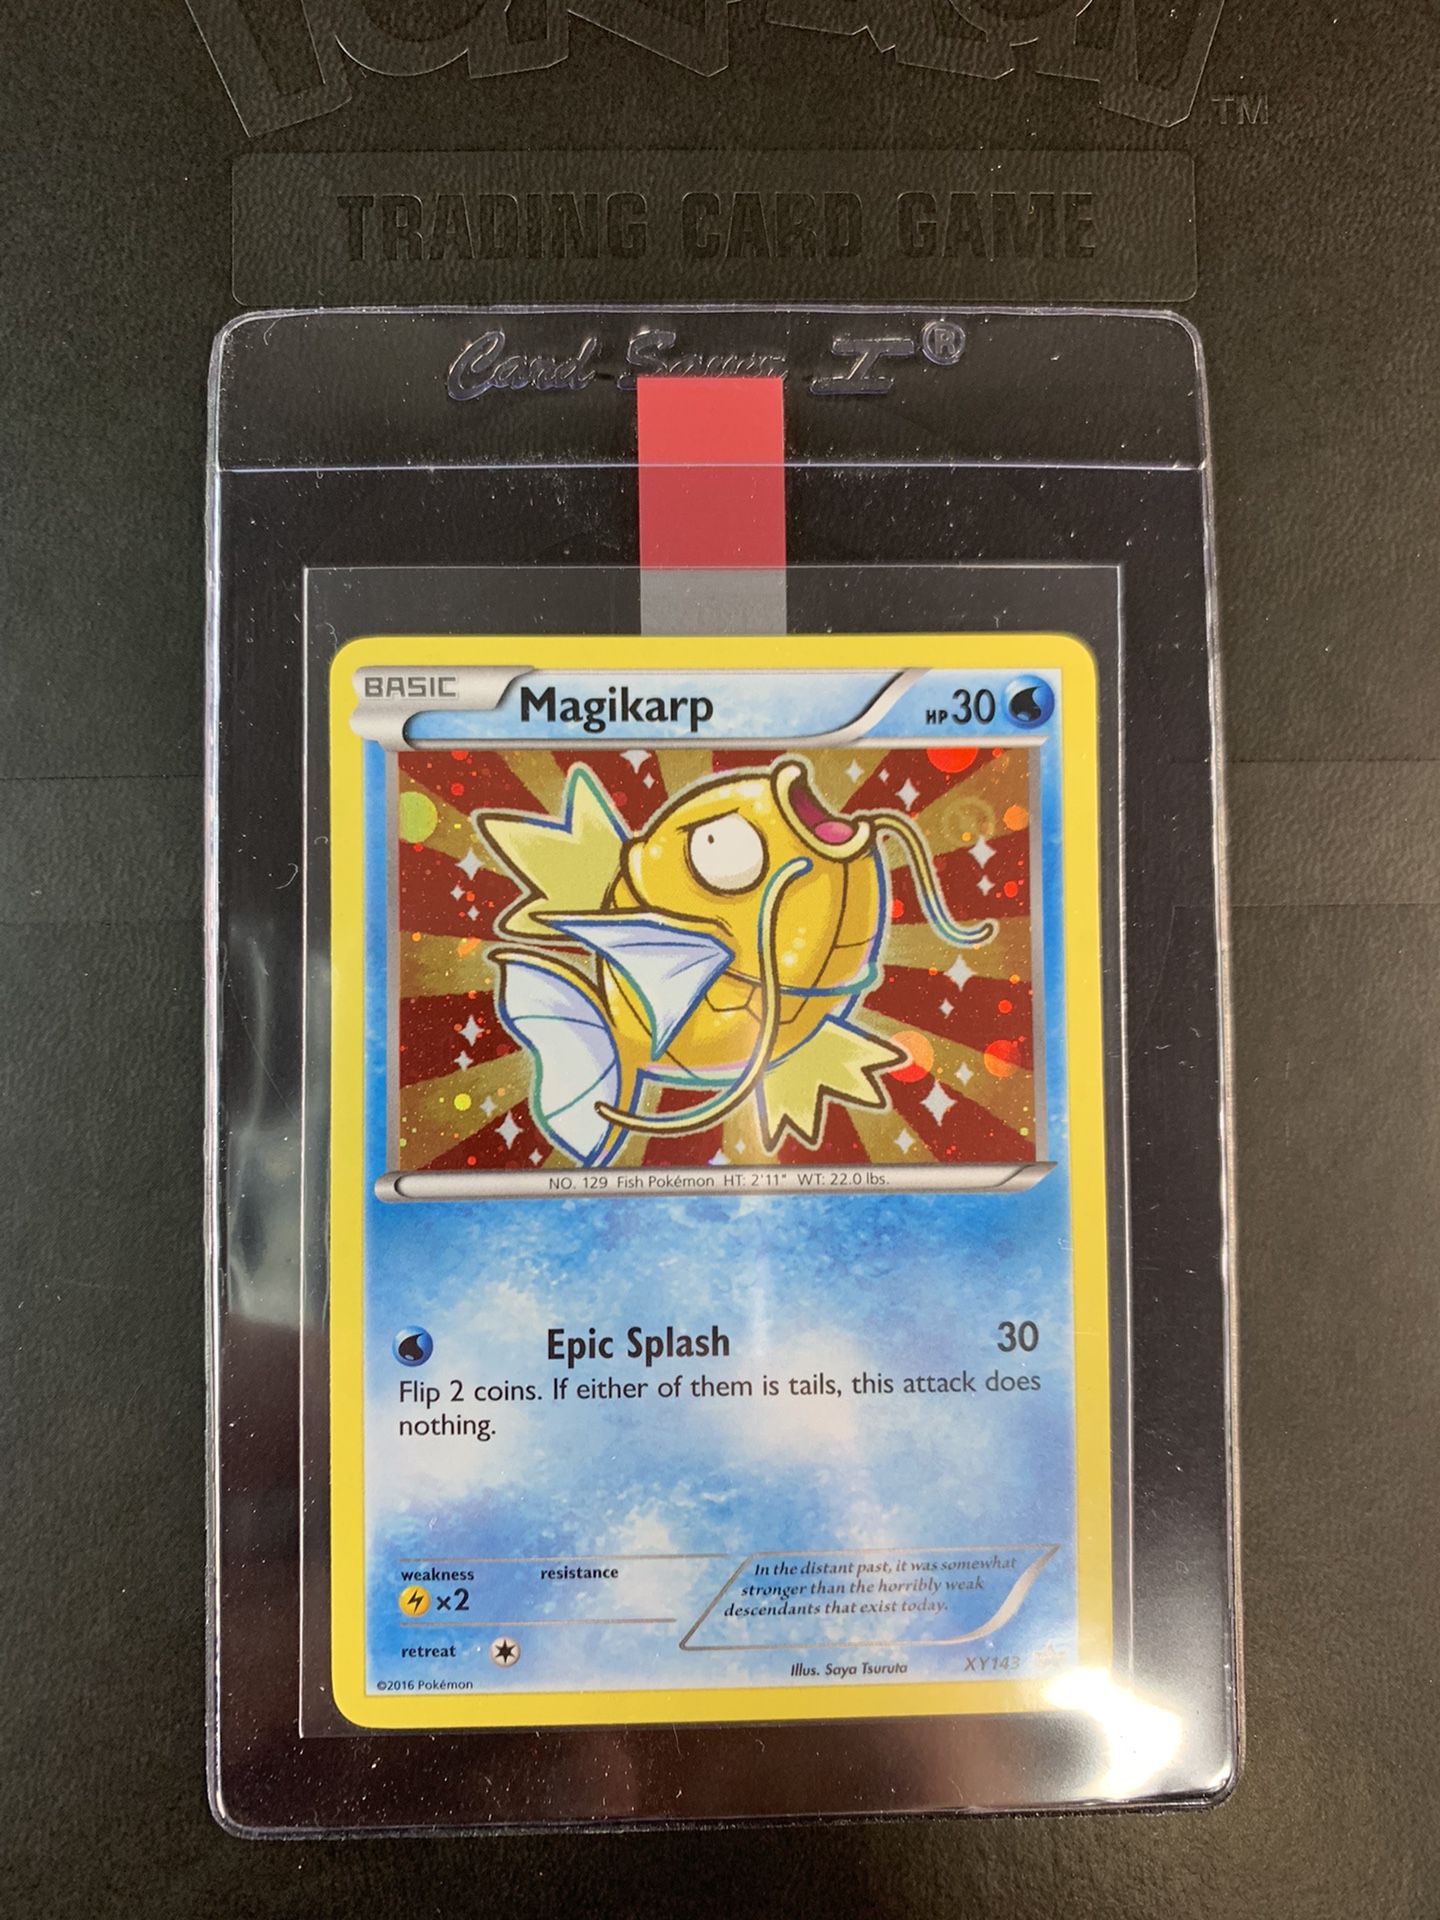 2016 Shiny Magikarp Pokémon Card